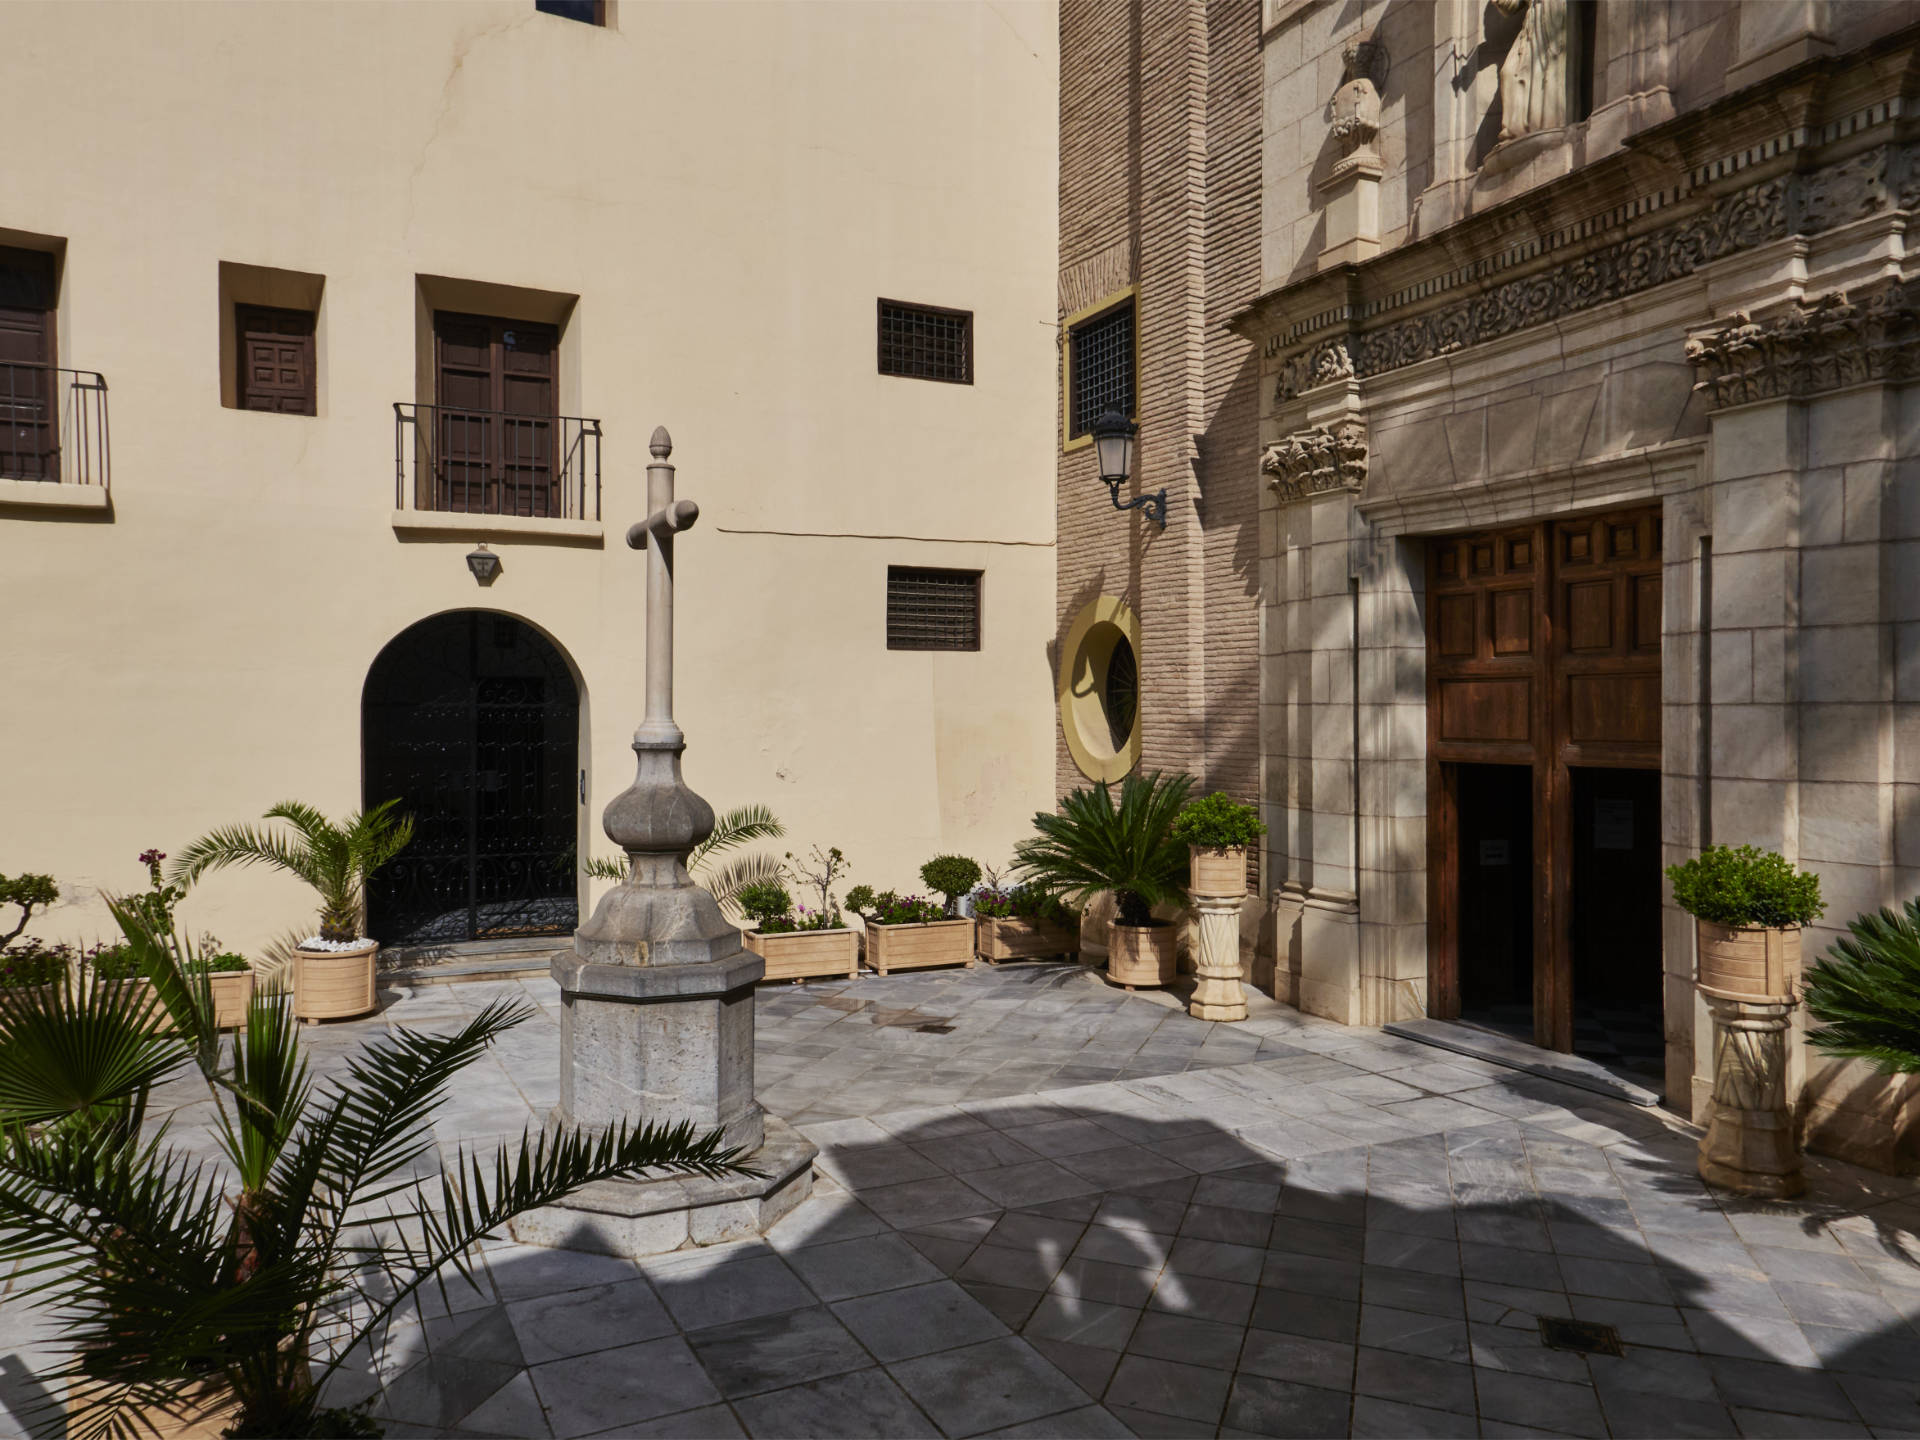 Convento de Santa Clara Murcia.